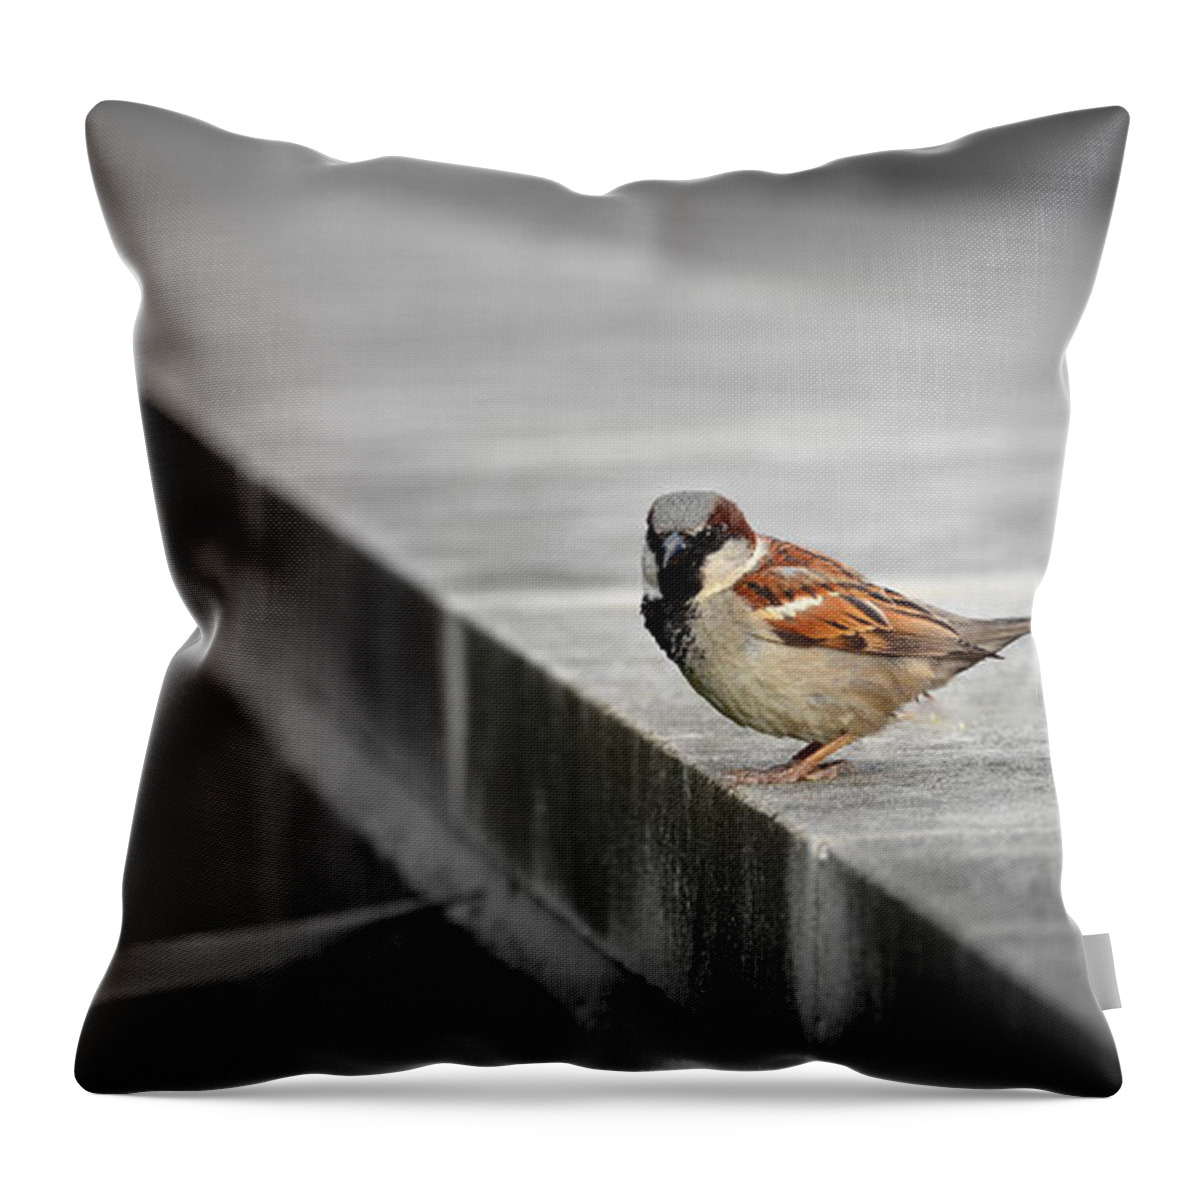 Bird Throw Pillow featuring the photograph On the Edge by Andrea Platt